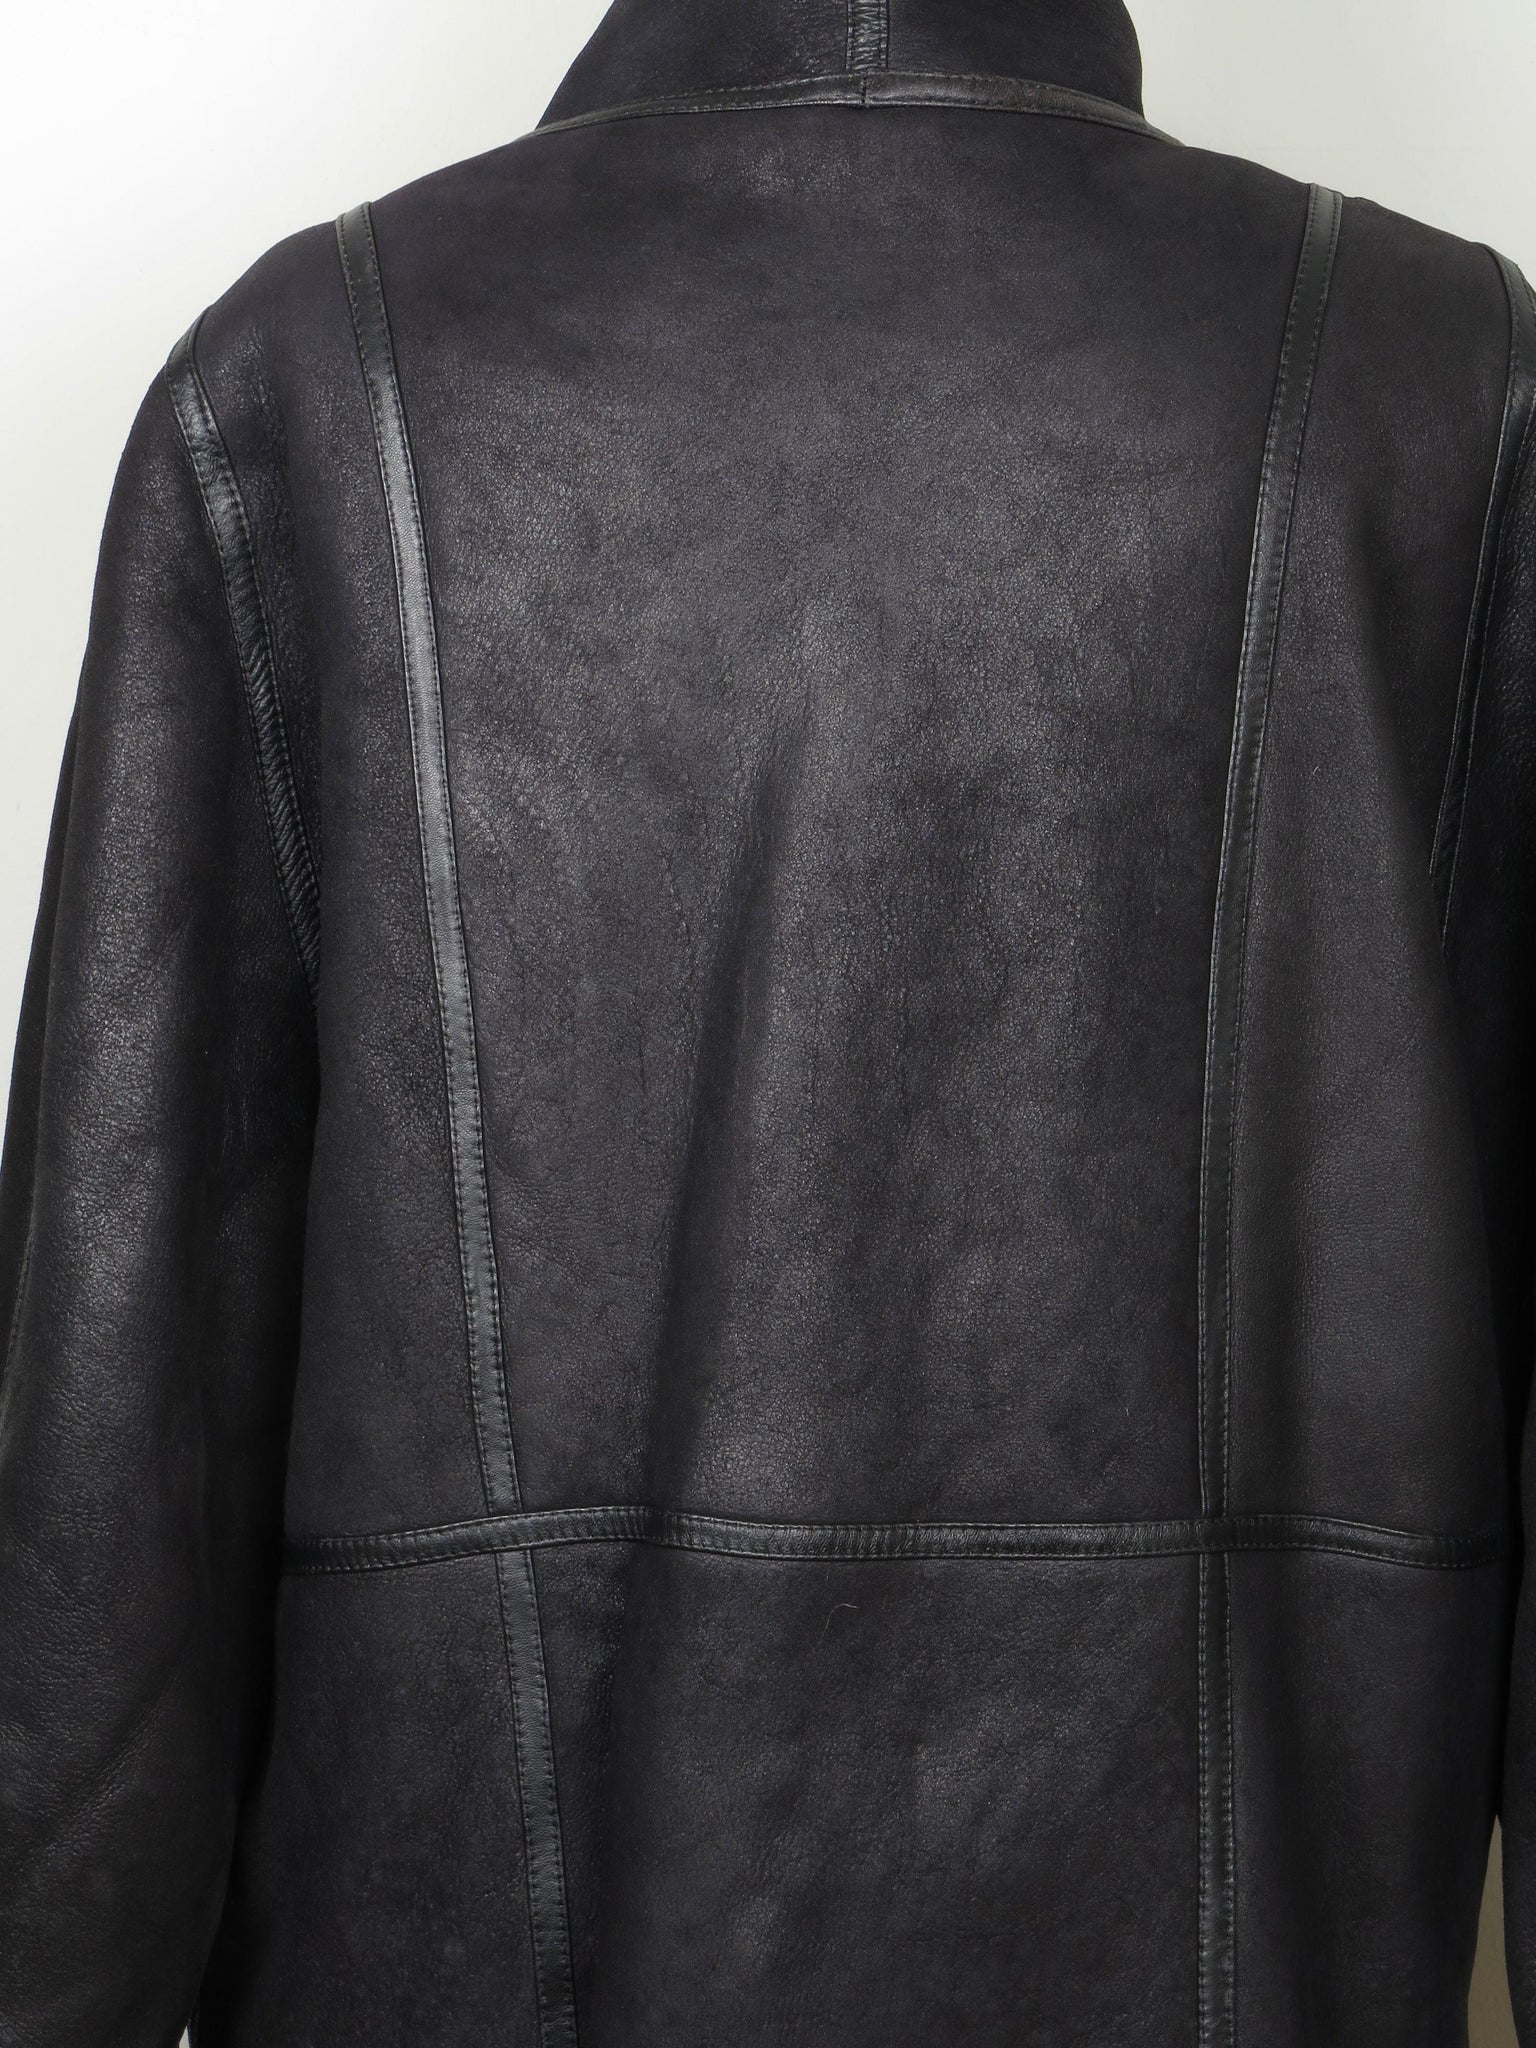 Women’s Black Sheepskin/Shearling 3/4 Coat L/XL - The Harlequin